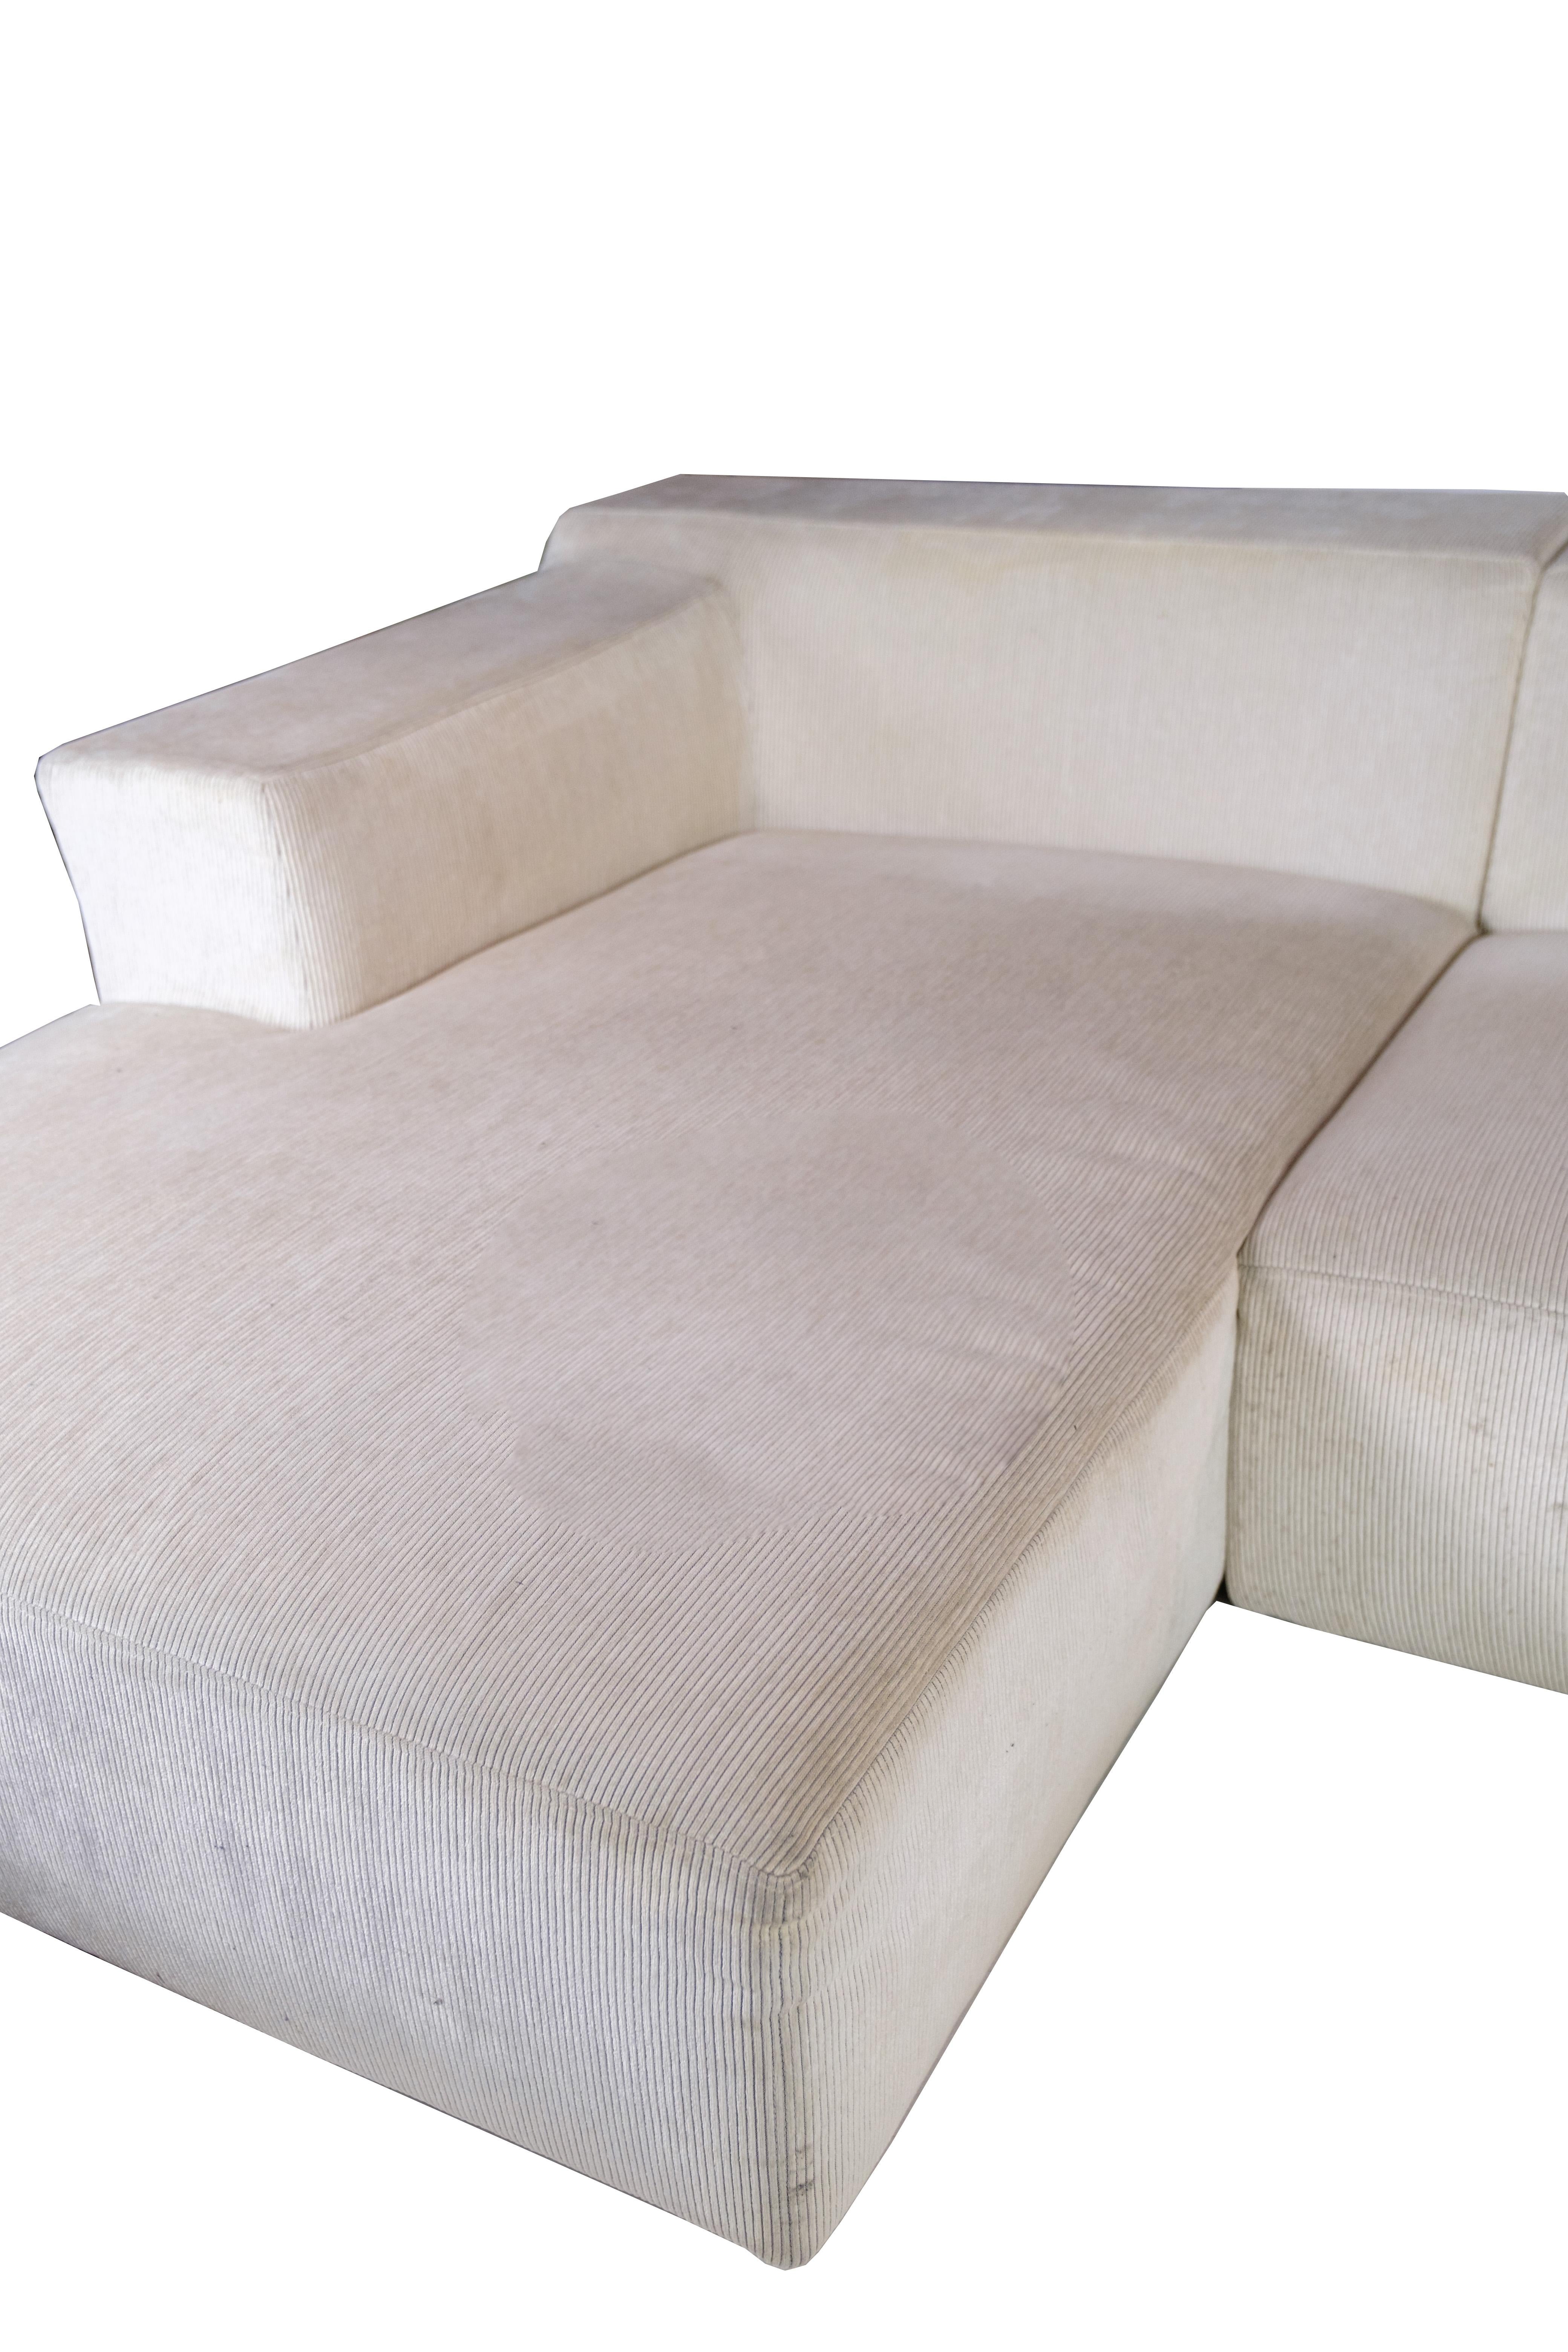 Scandinavian Modern Sofa, Model Baseline Designed by Jens Juul Eilersen In Excellent Condition For Sale In Lejre, DK